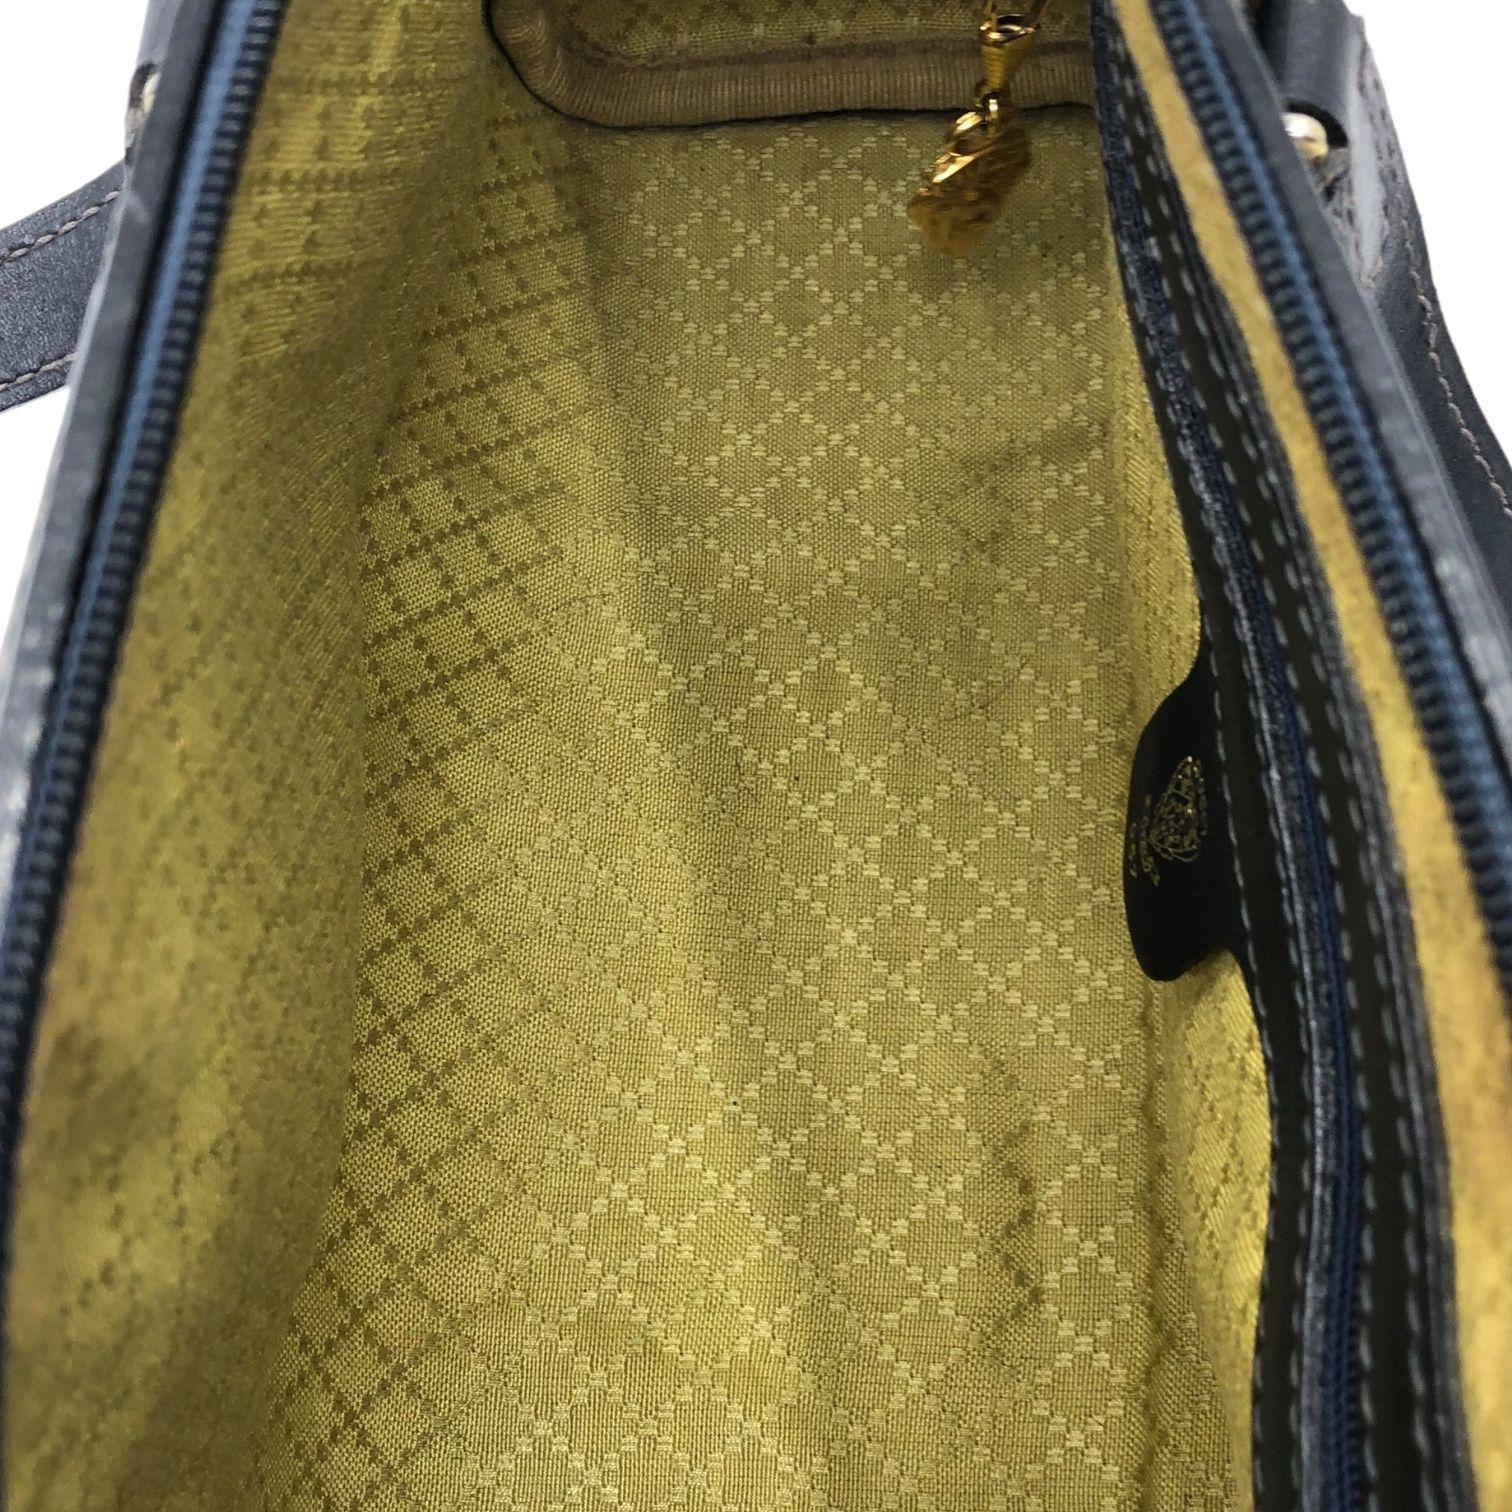 GUCCI(グッチ) GG pattern canvas leather mini Boston bag GG 柄 キャンバス レザー ミニ ボストン バッグ ネイビー 087 OLD GUCCI ハンド